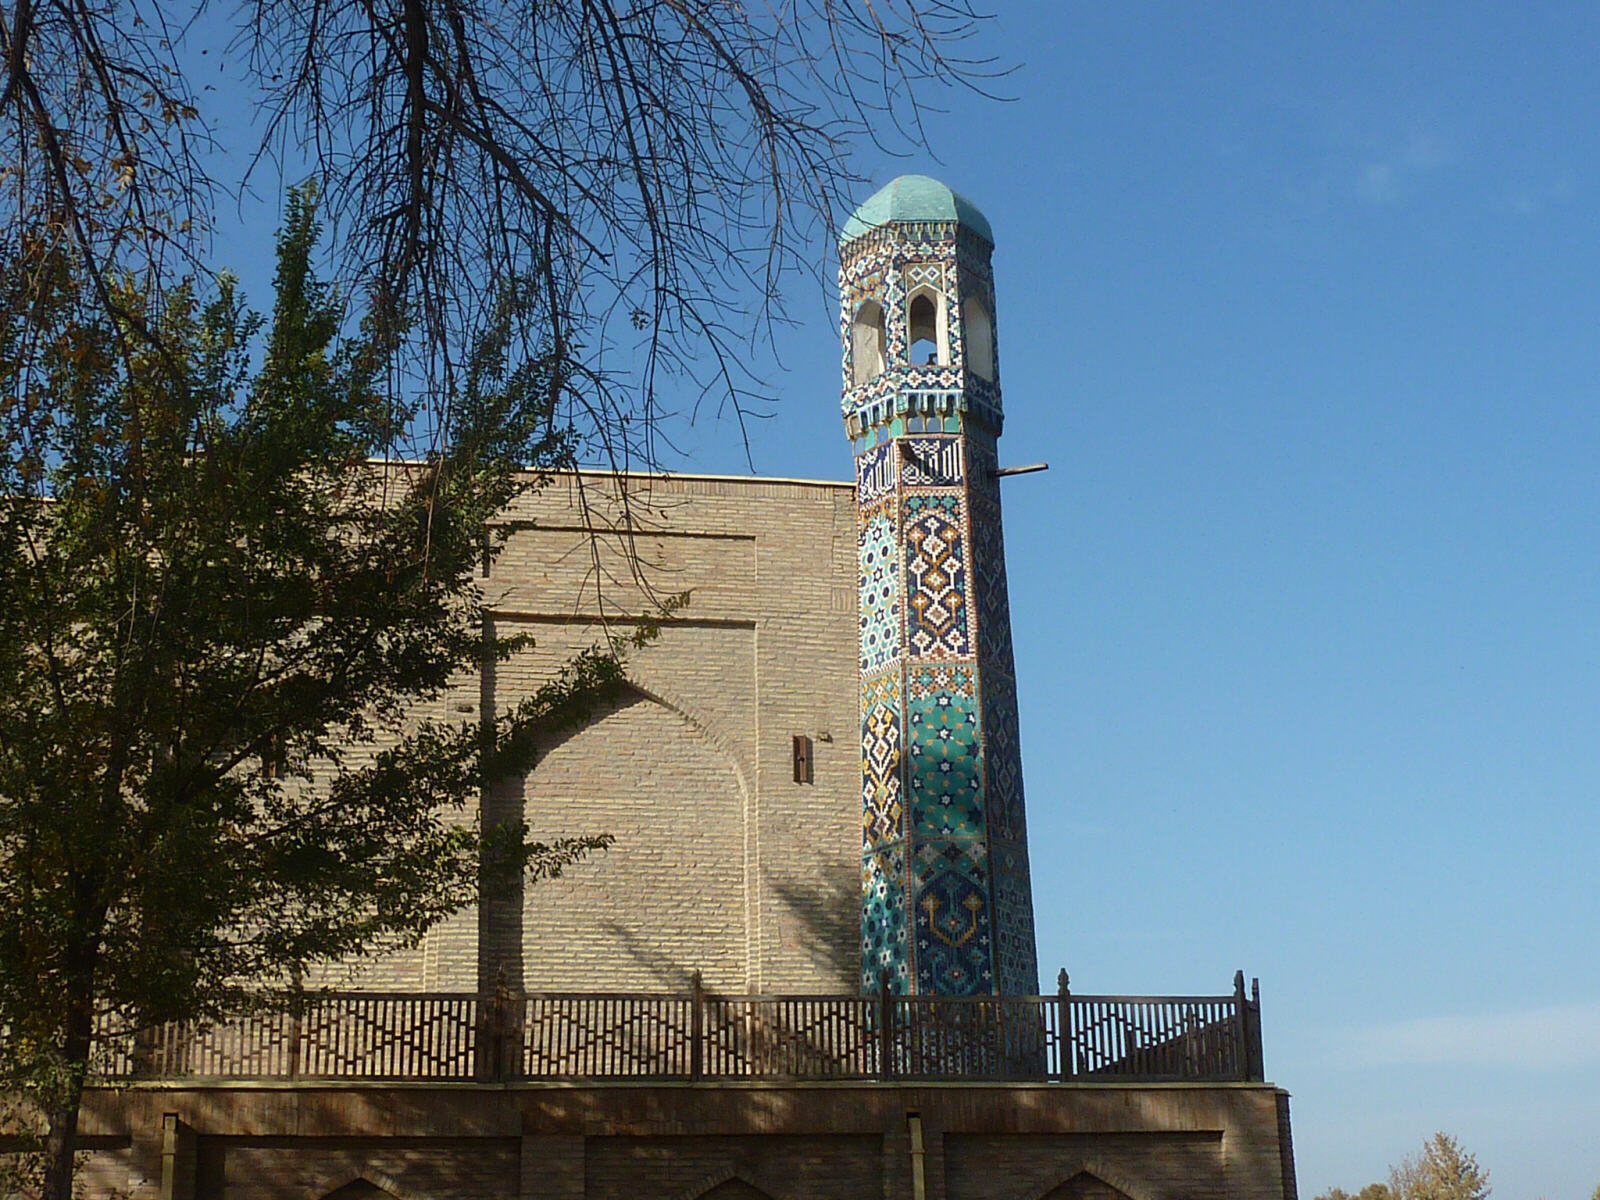 The Khan's palace in Kokand, Uzbekistan